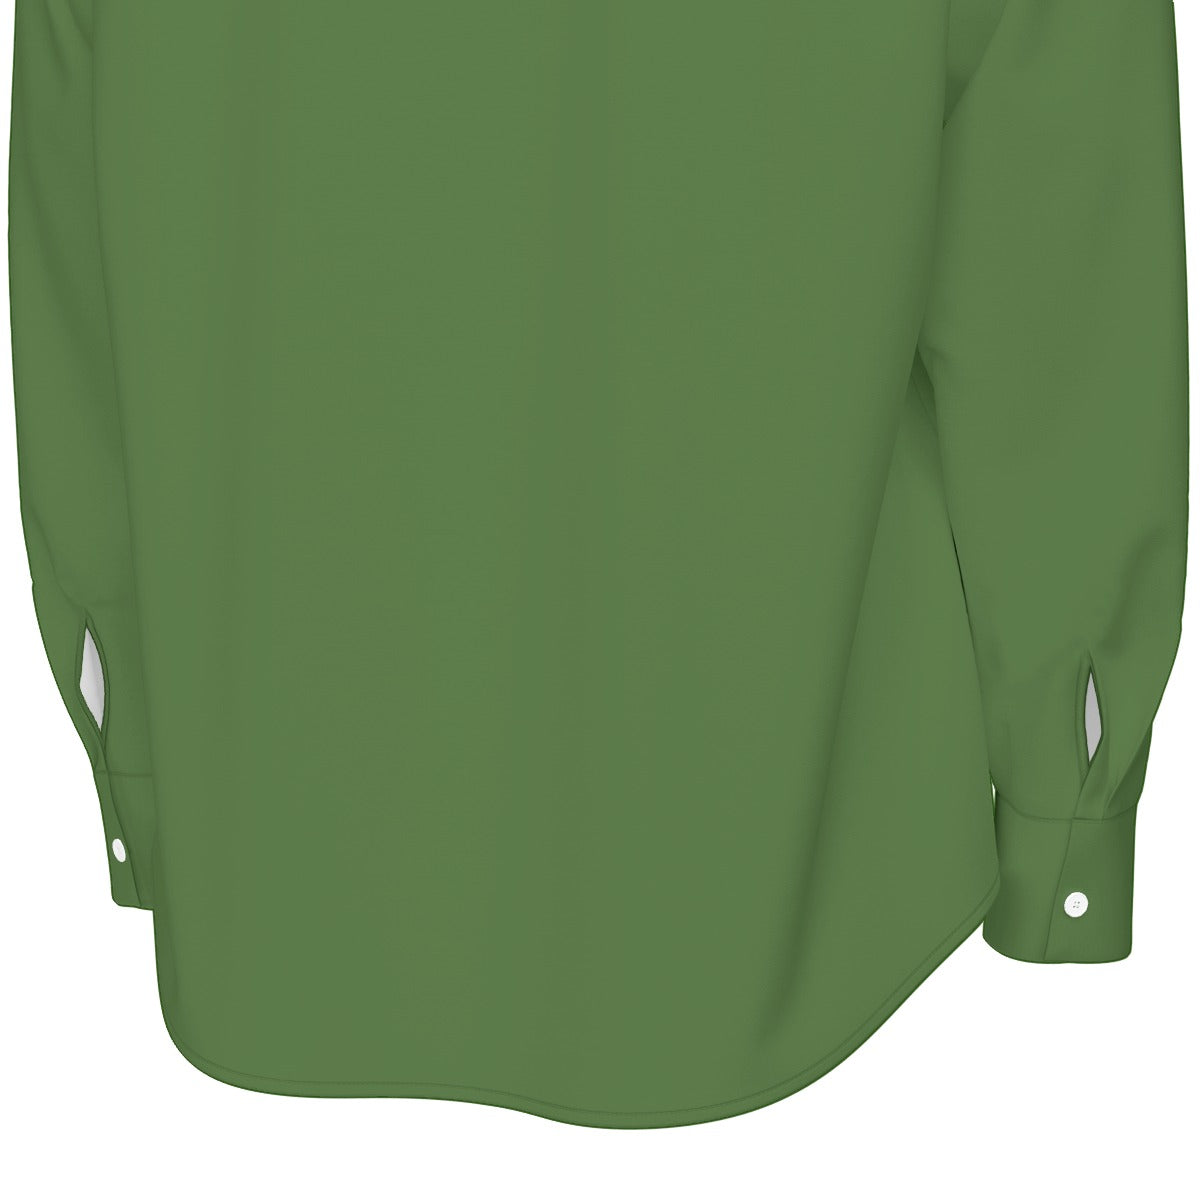 Sixty Eight 93 Logo White Forest Green Men's Cotton Long Sleeve Shirt